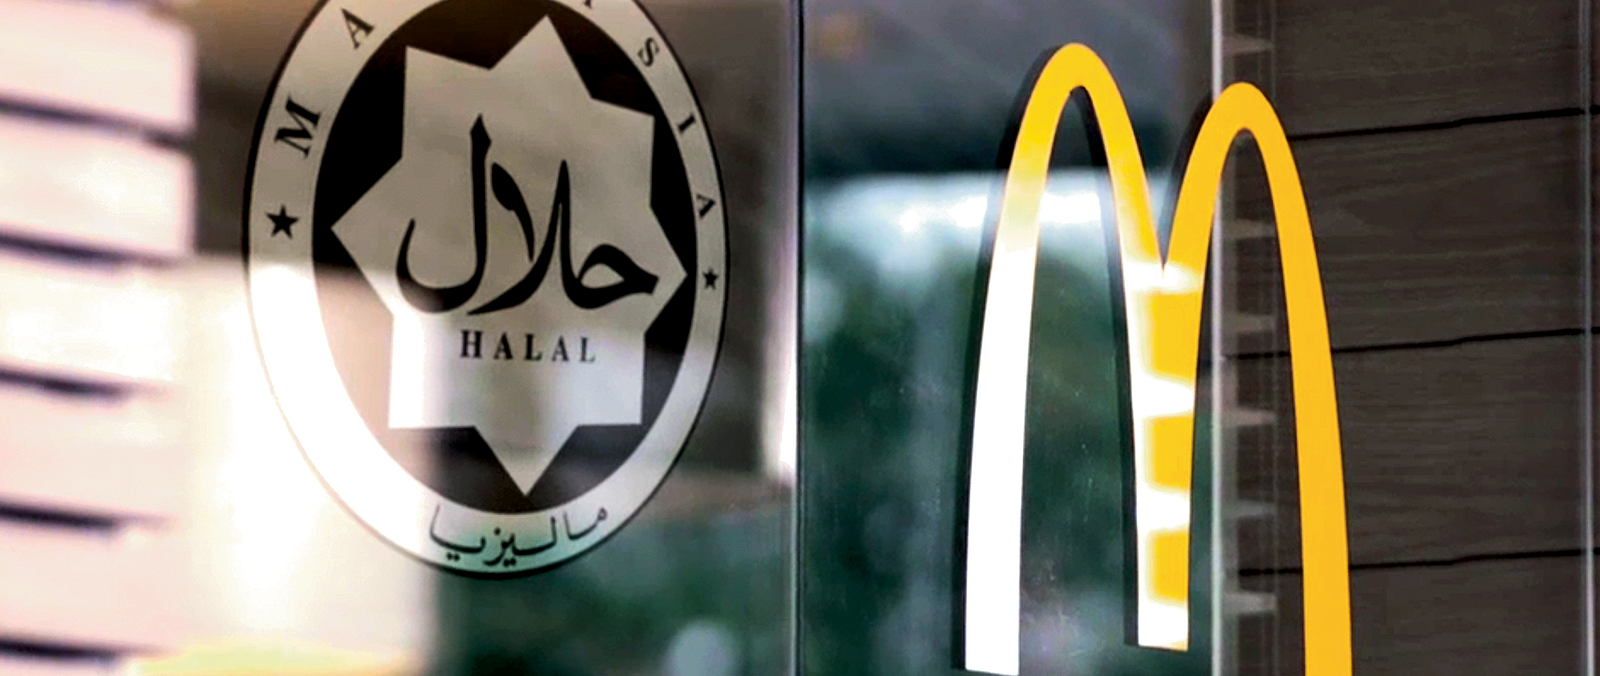 McDonald's® Malaysia 100% Halal's image'